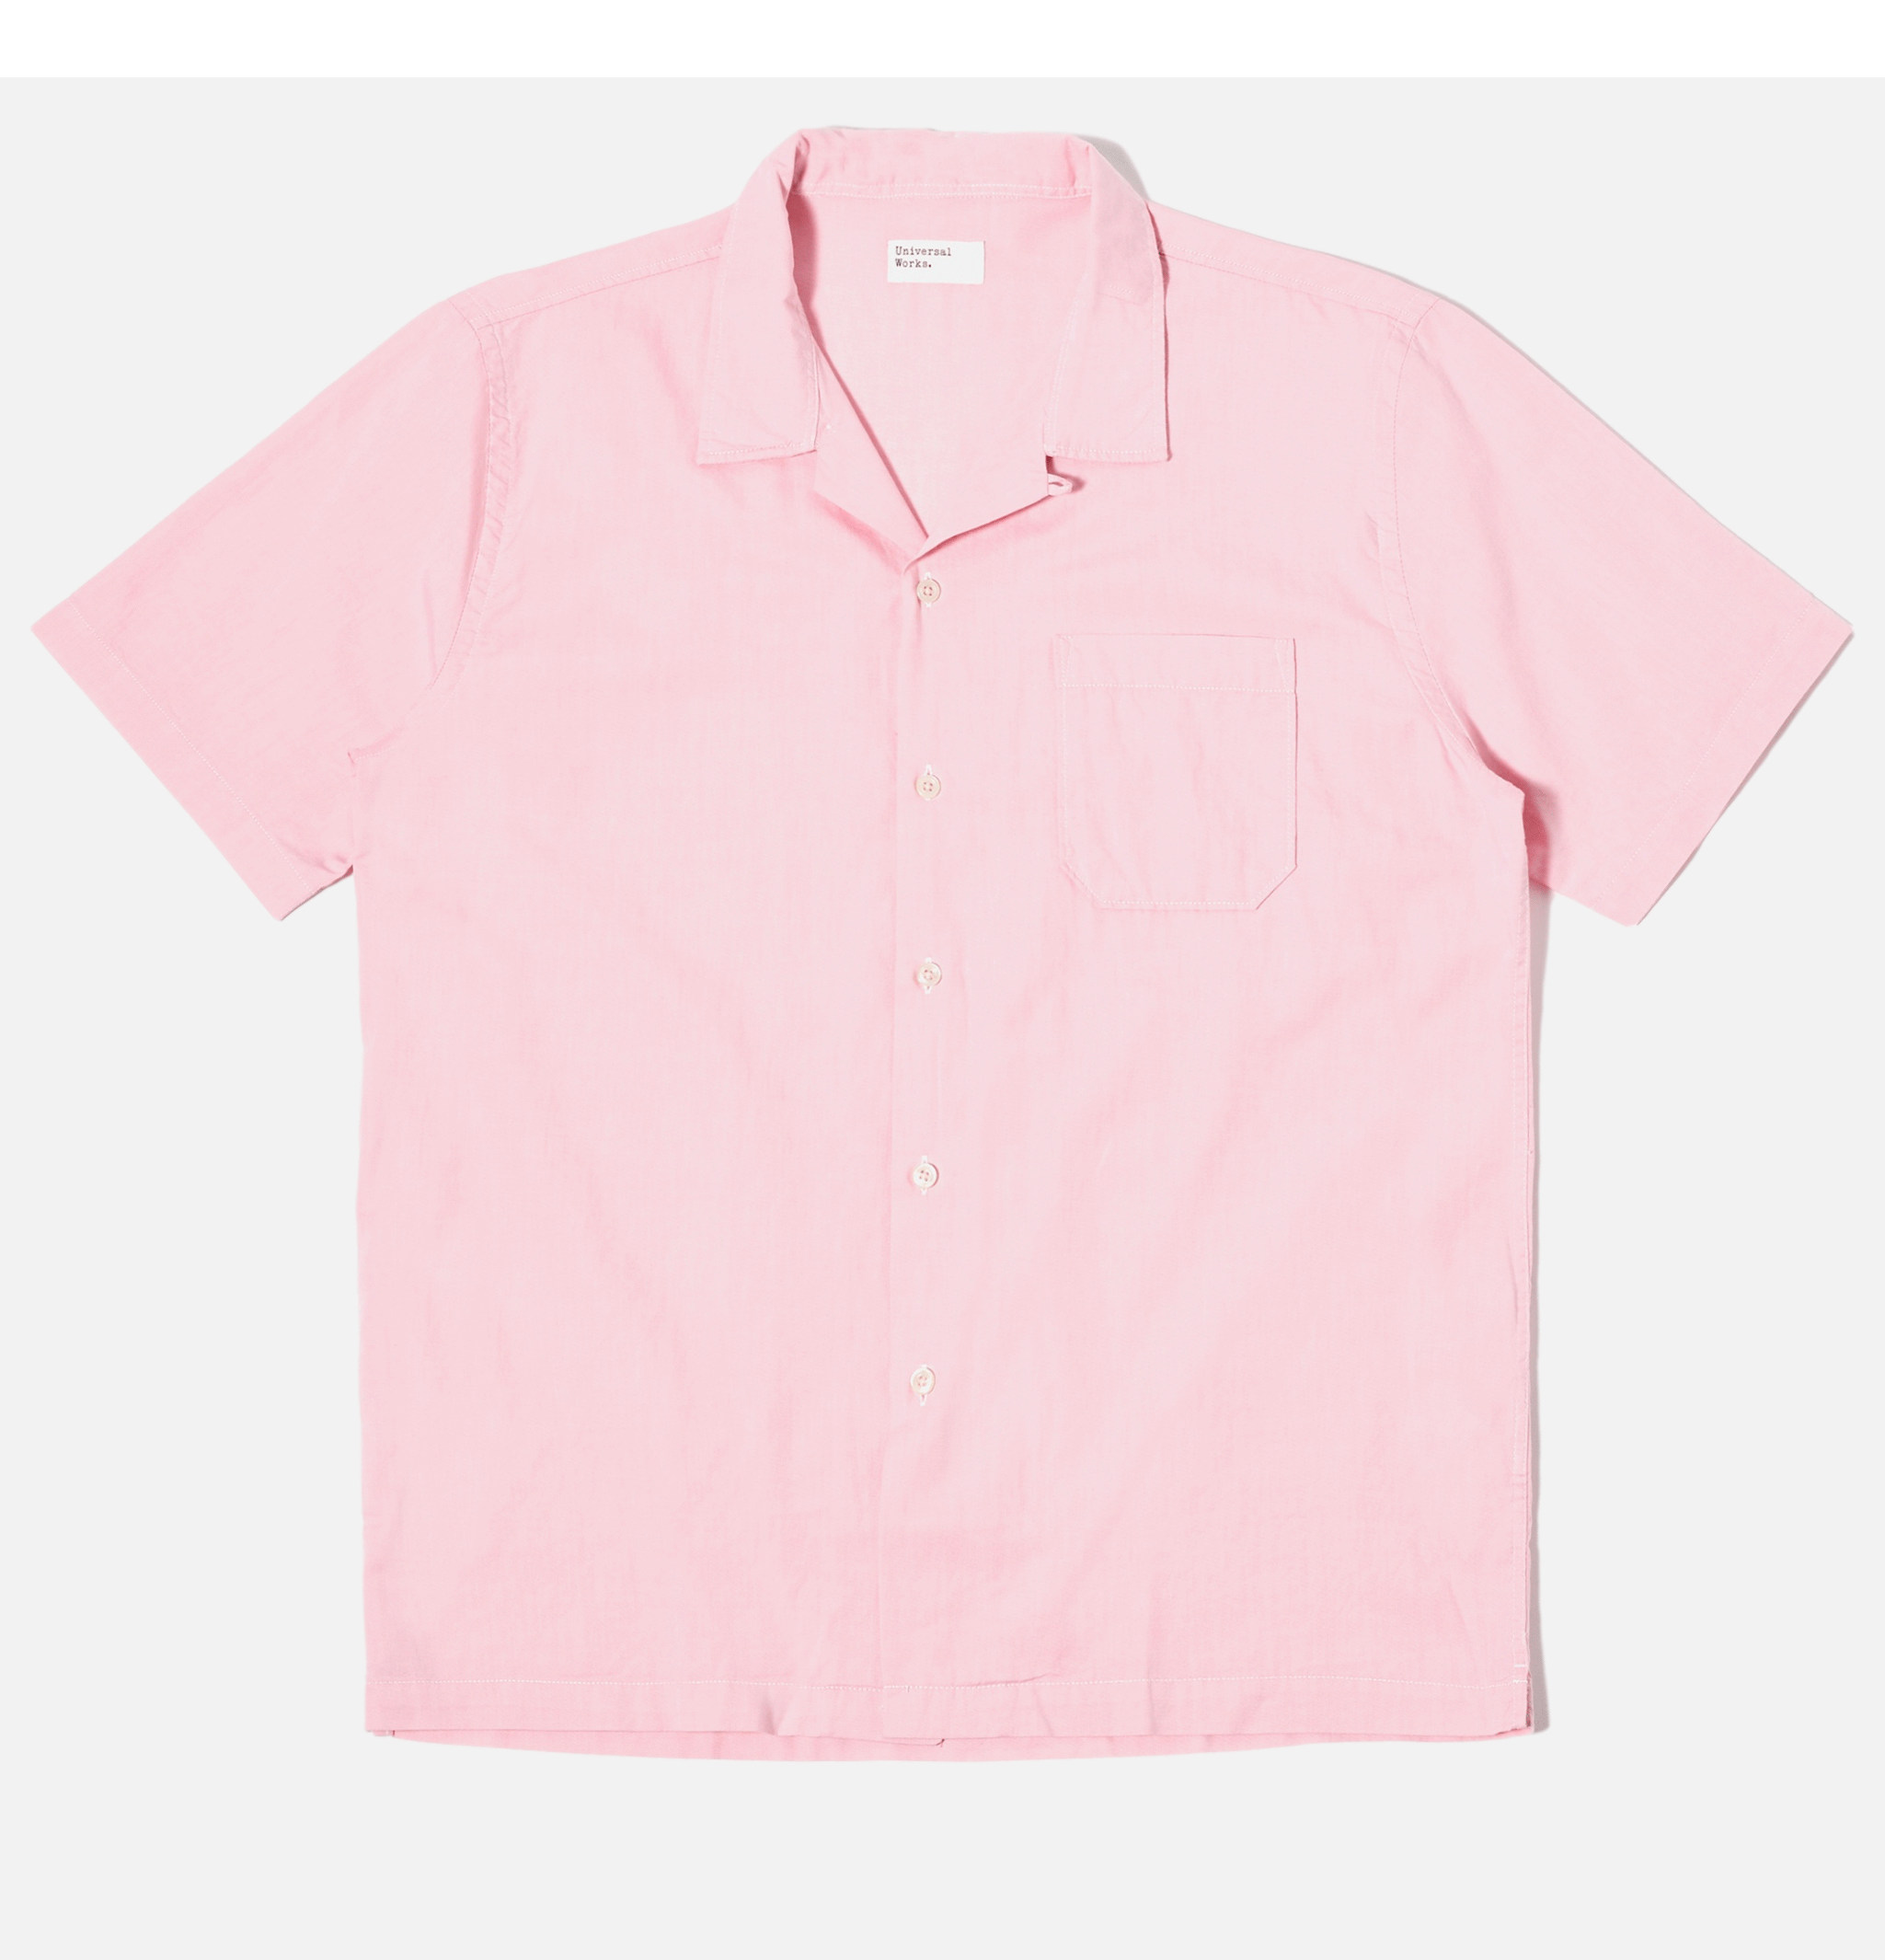 Road Shirt Oxford Pink